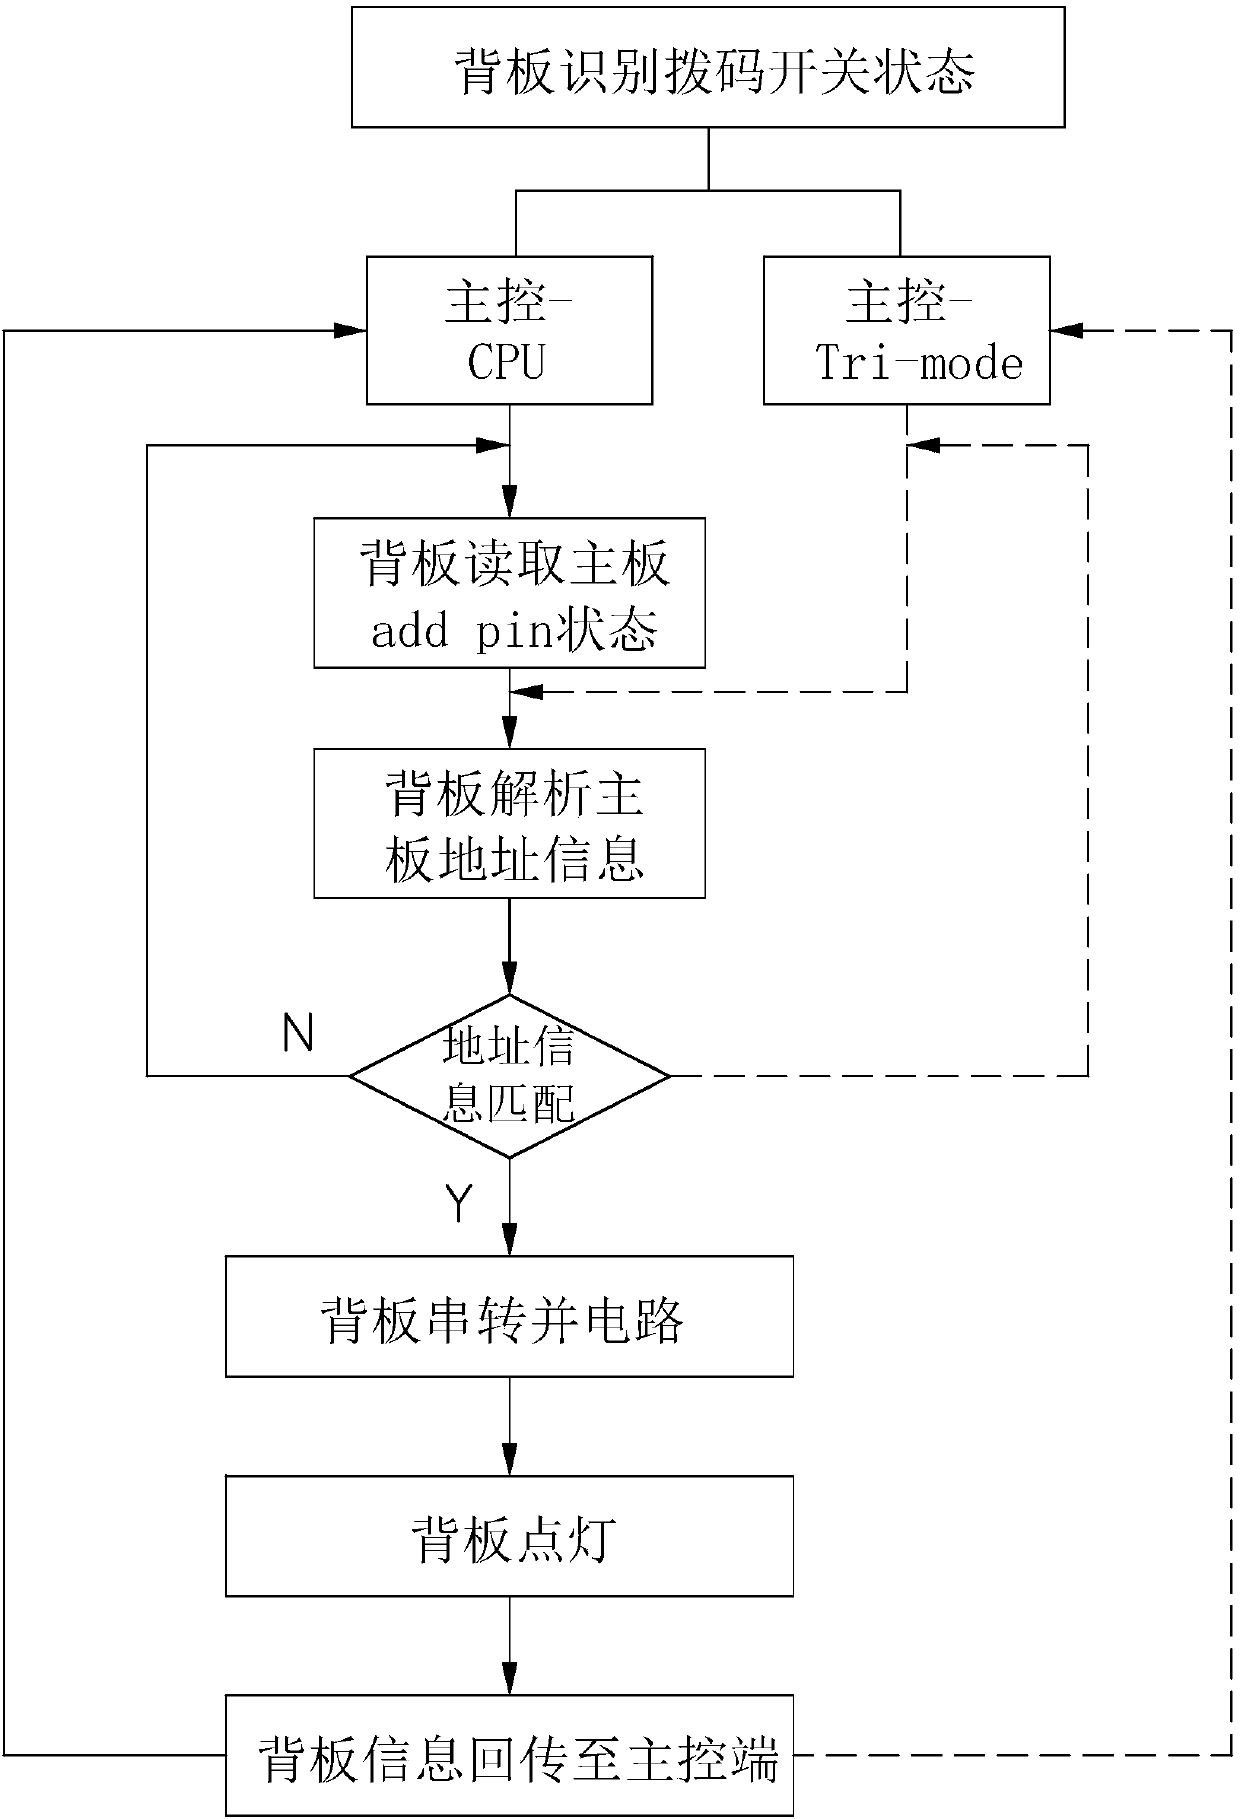 Design method for lighting backplanes of hard disks of multiple NVMe (non-volatile memory expresses)